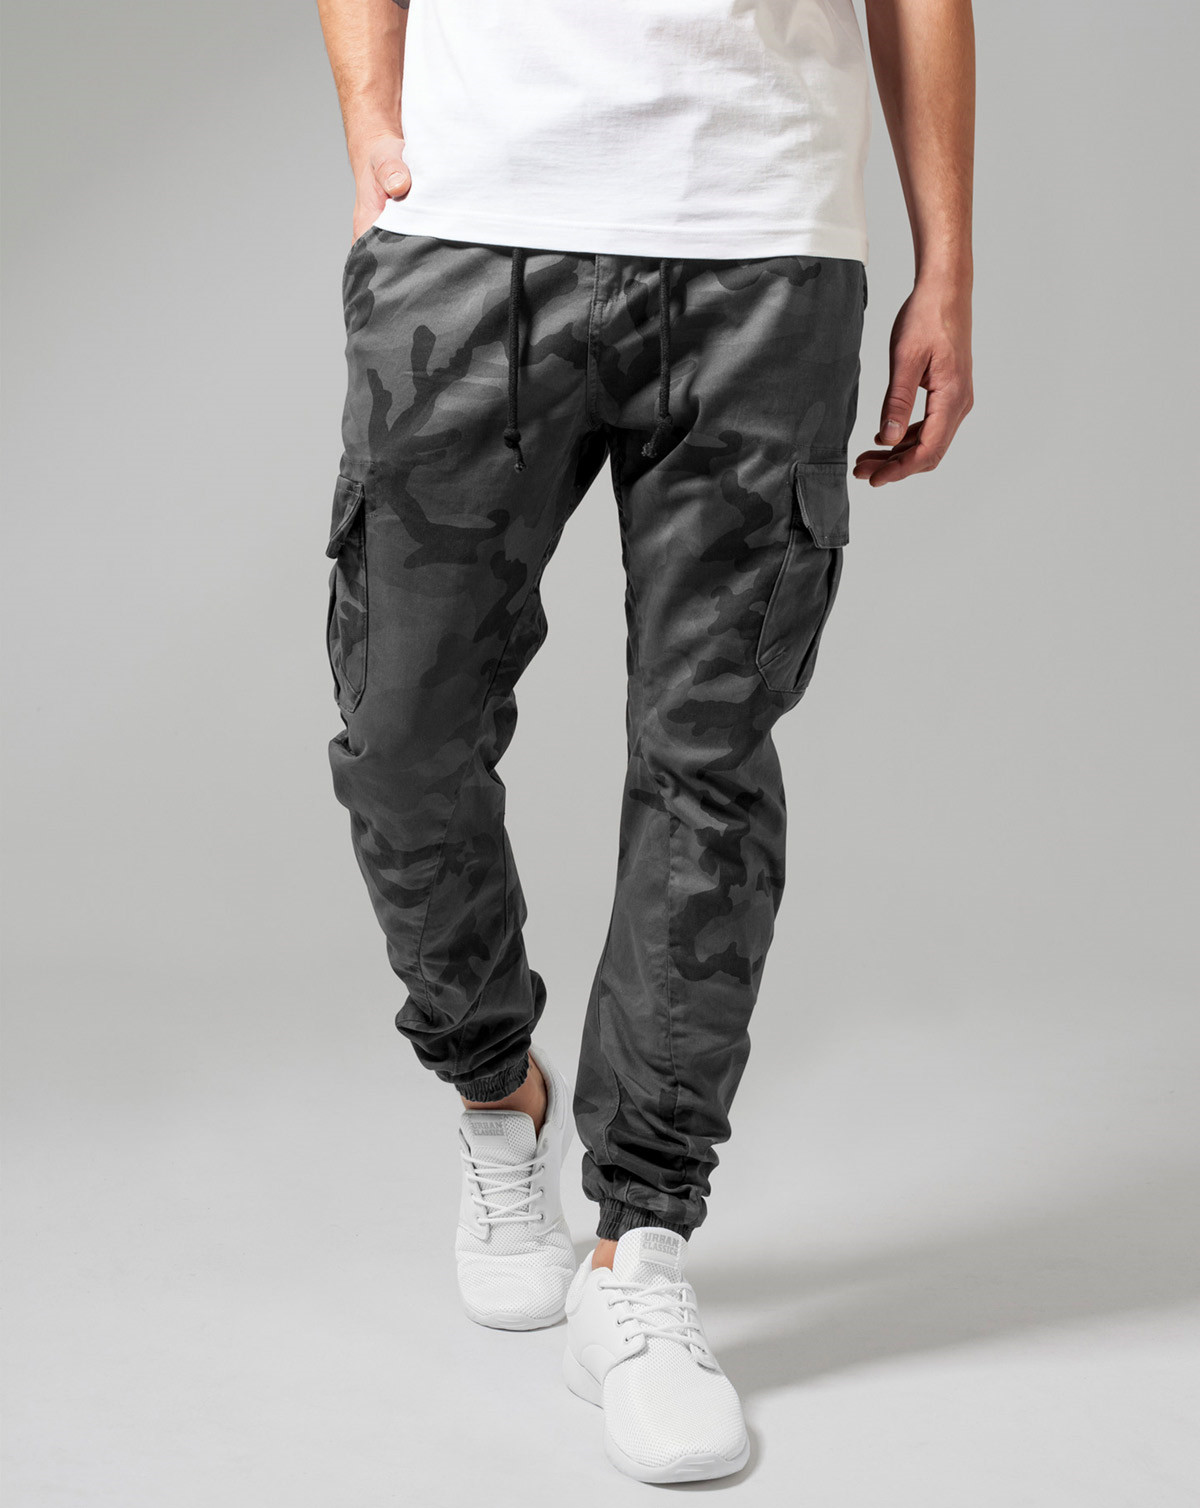 Urban Classics Camo Cargo Jogging Pants (Grey Camo, W32)